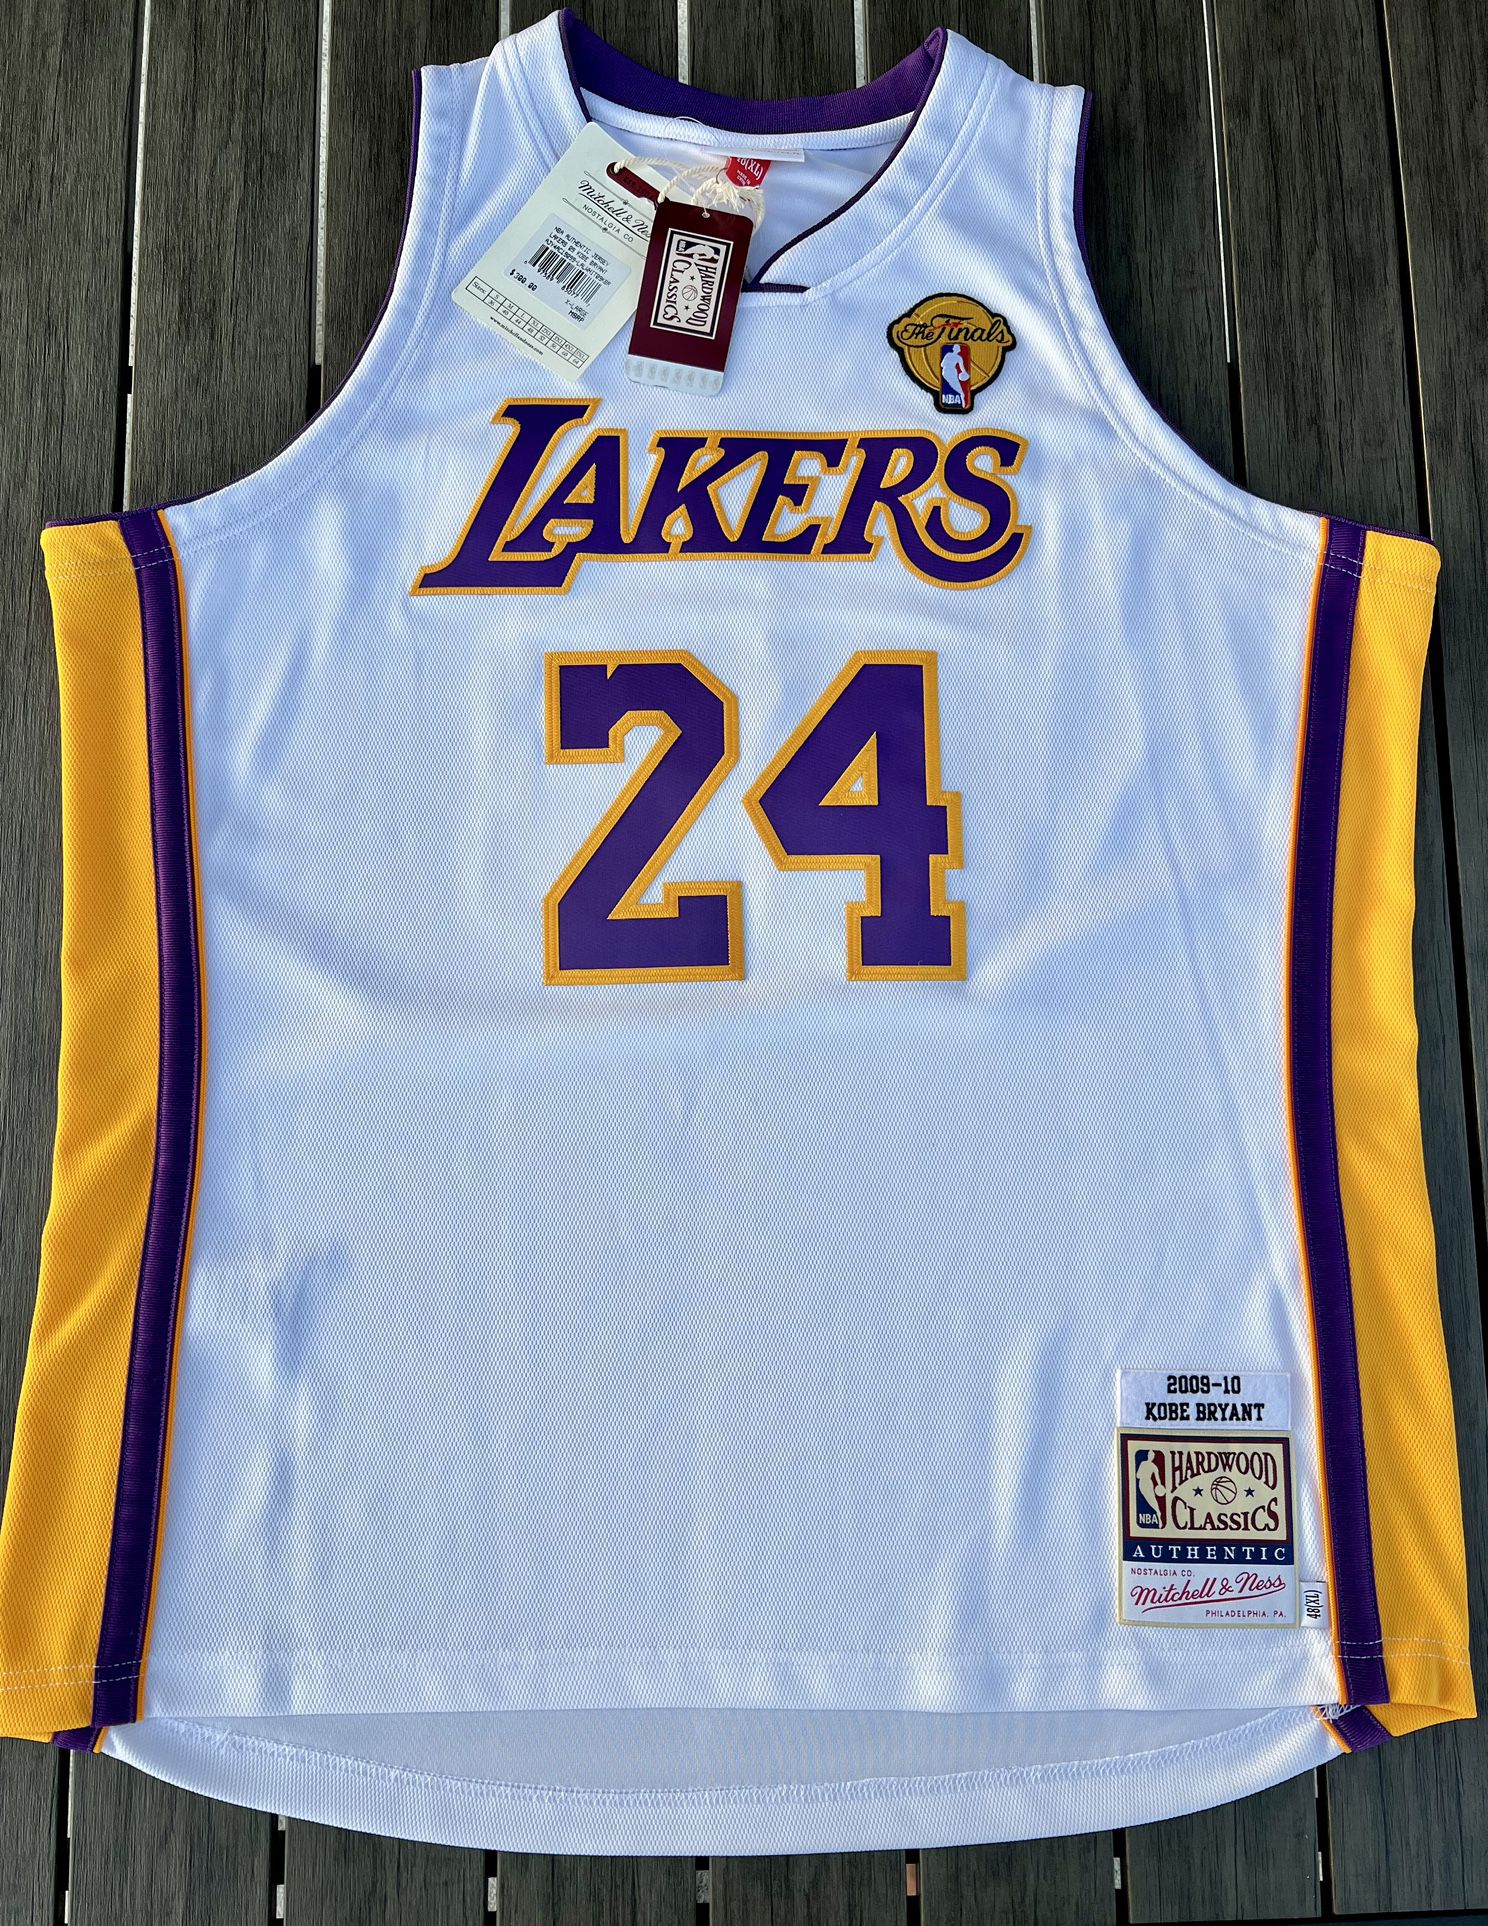 Authentic Blue Mitchell & Ness Kobe Bryant Lakers Jersey